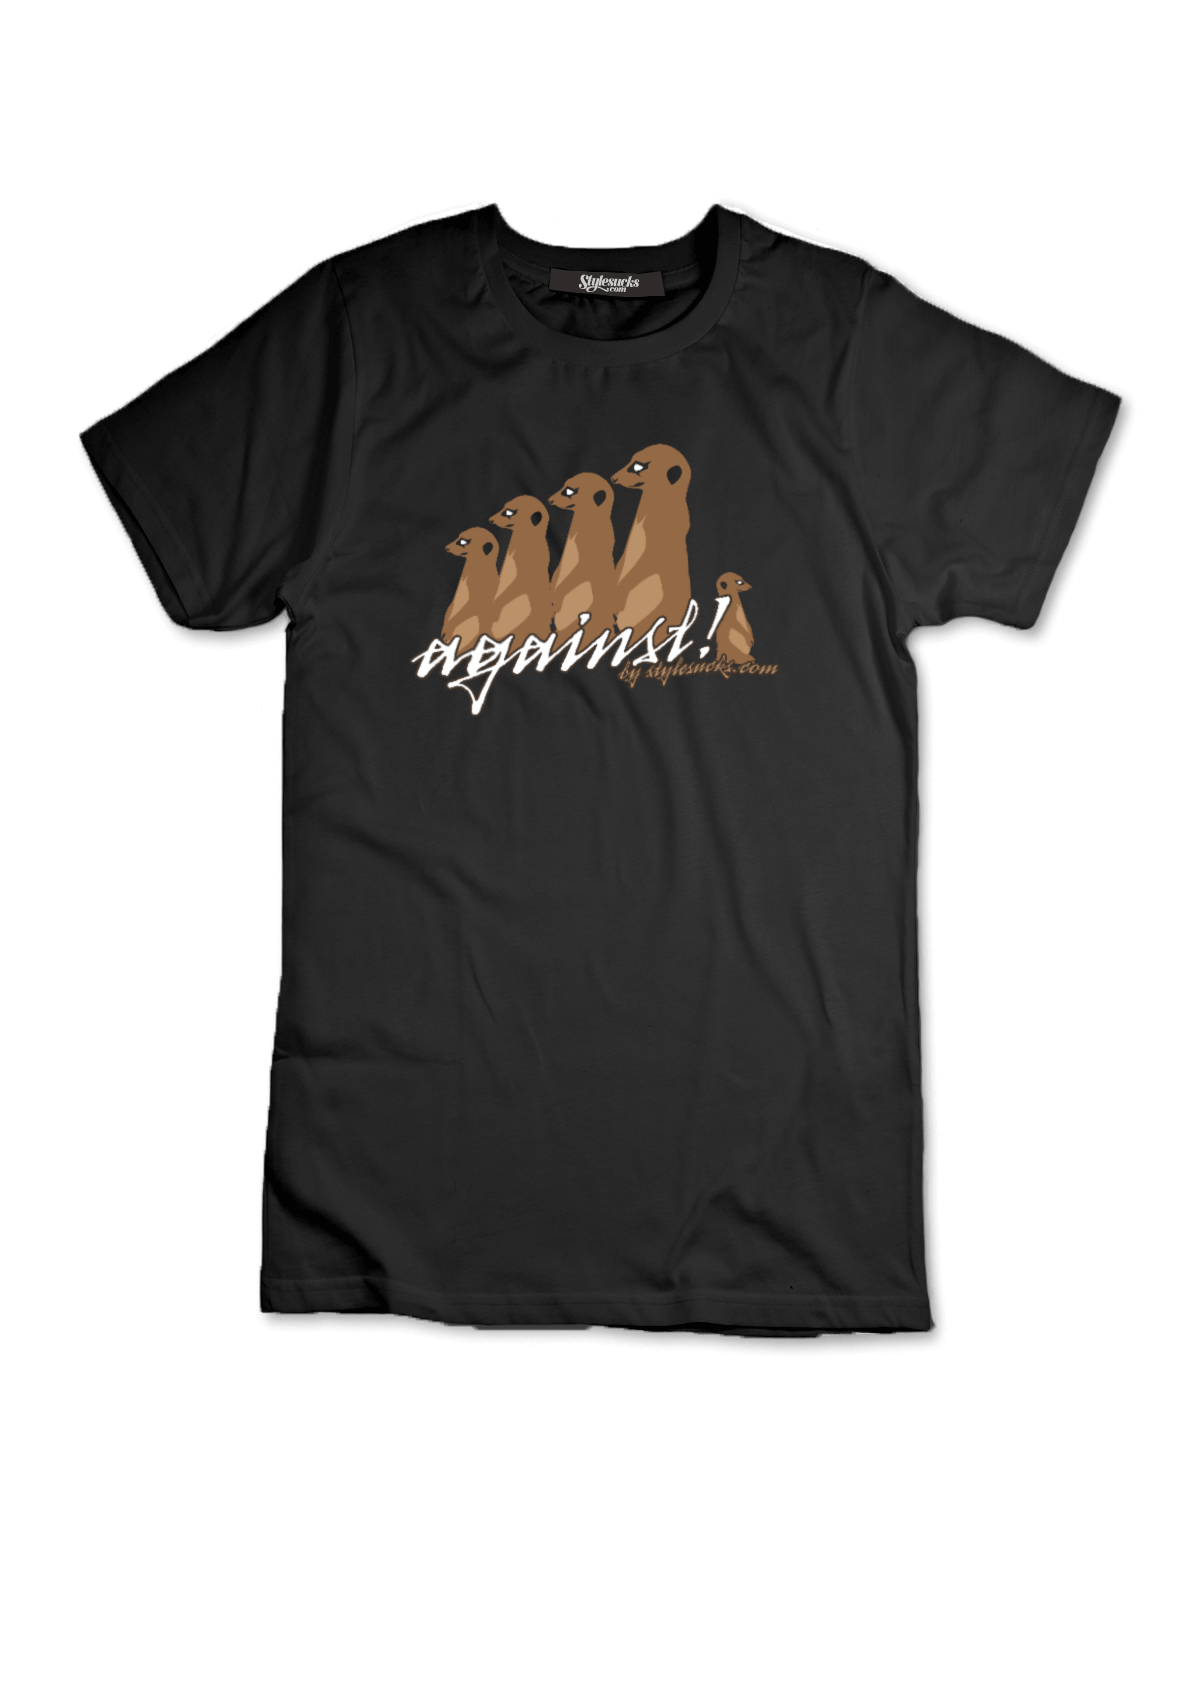 Against! T-Shirt